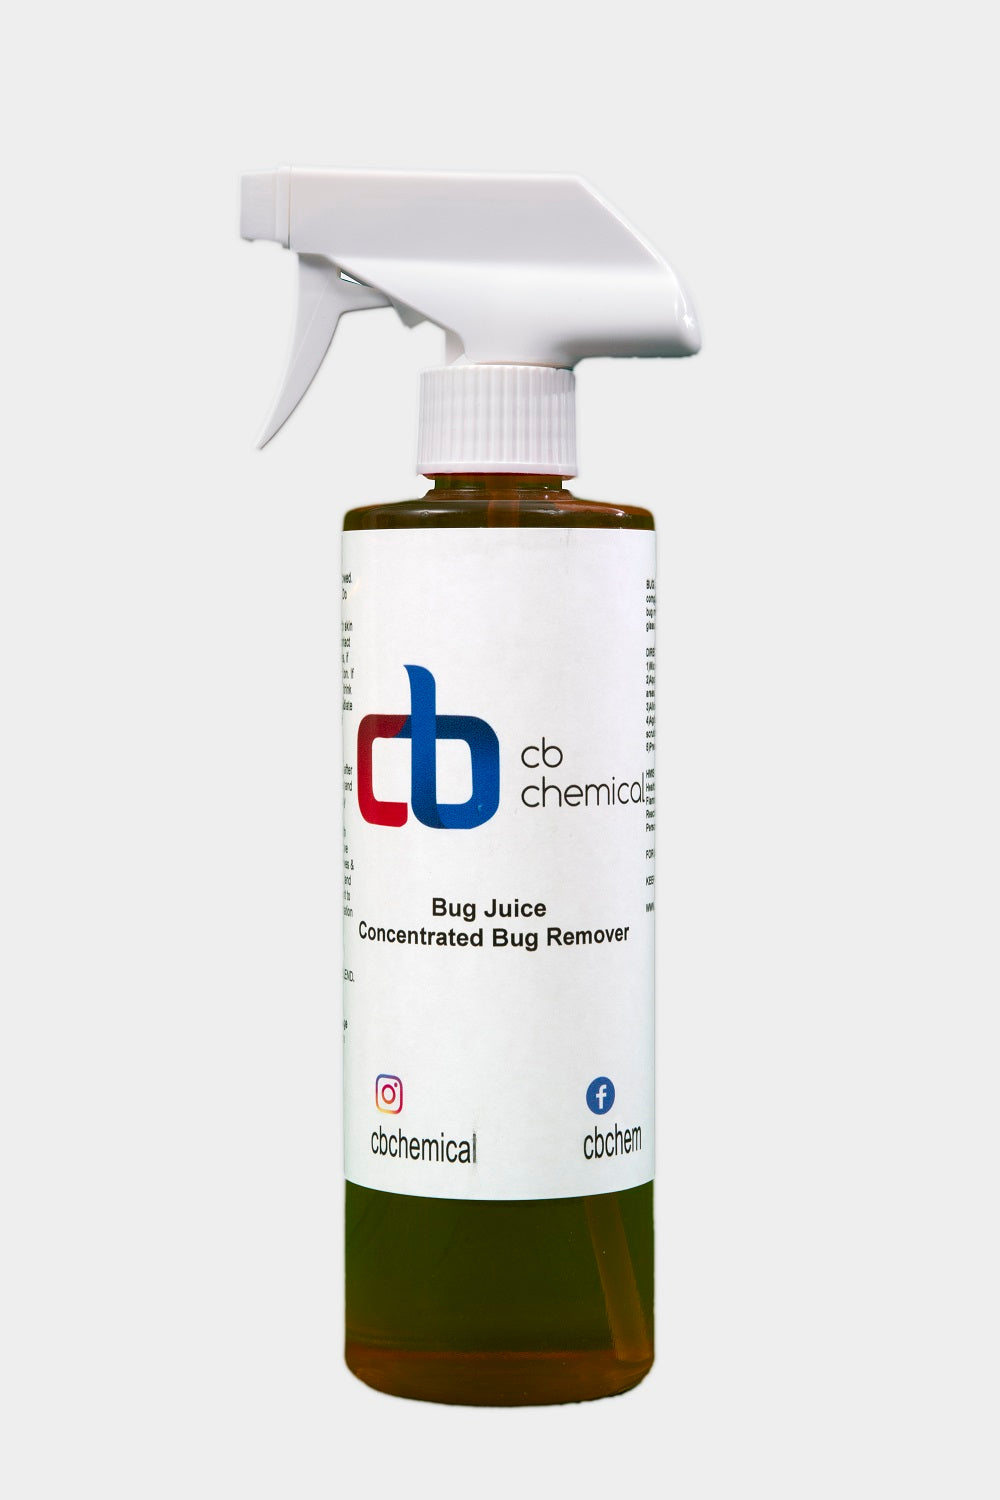 Bug Juice – C & B Chemical, Inc